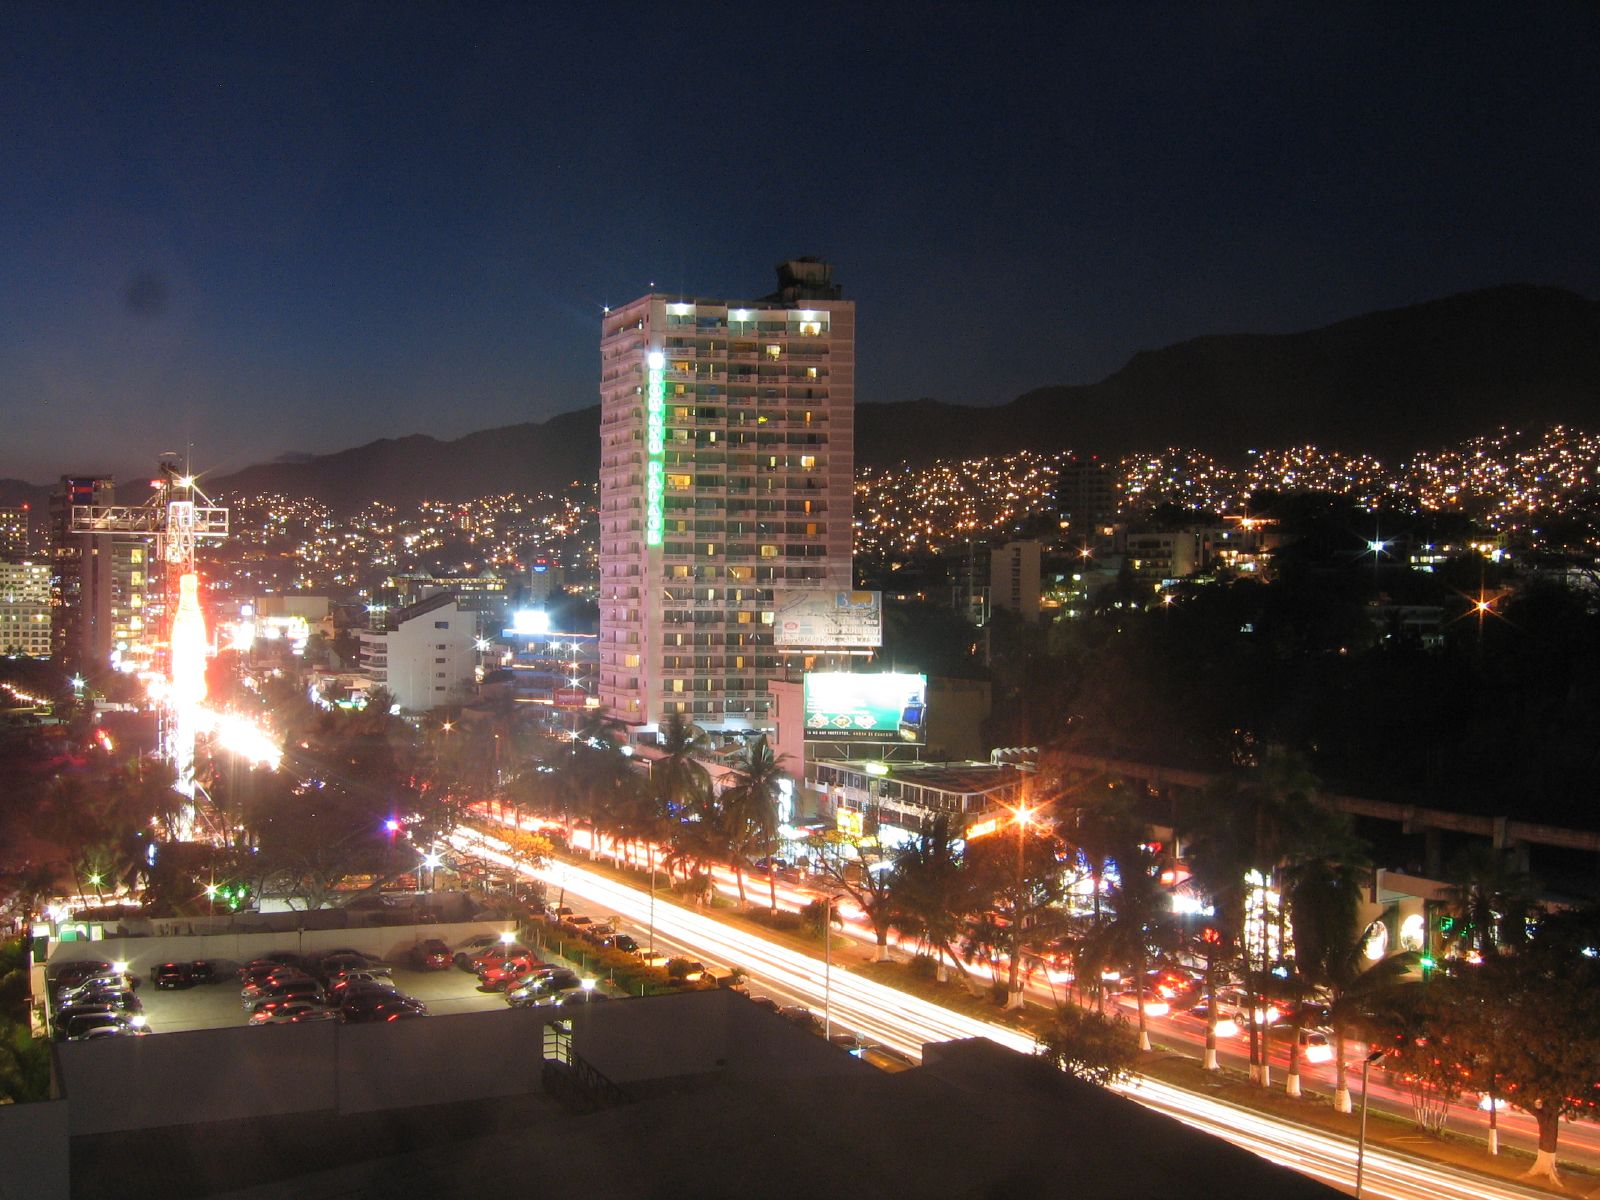 http://upload.wikimedia.org/wikipedia/commons/3/3b/Avenida_Costera_Miguel_Alem%C3%A1n_en_Acapulco,_M%C3%A9xico.jpg